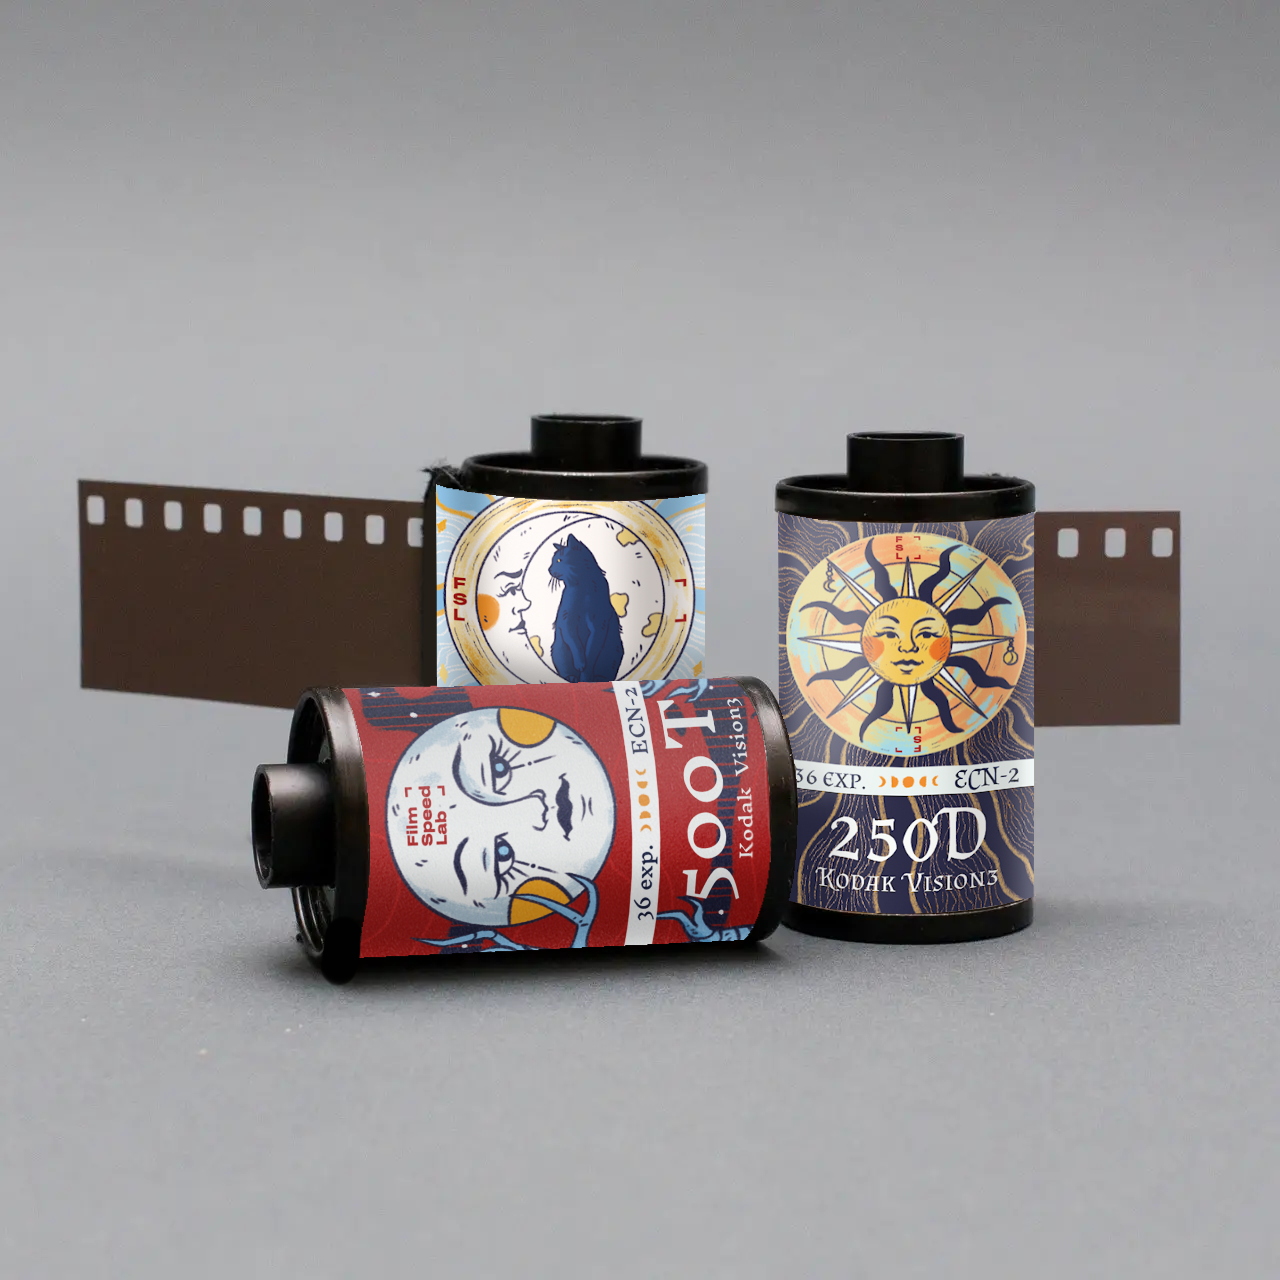 Kodak vision 250D  (135 type roll film, 36 Exposures), 1 roll